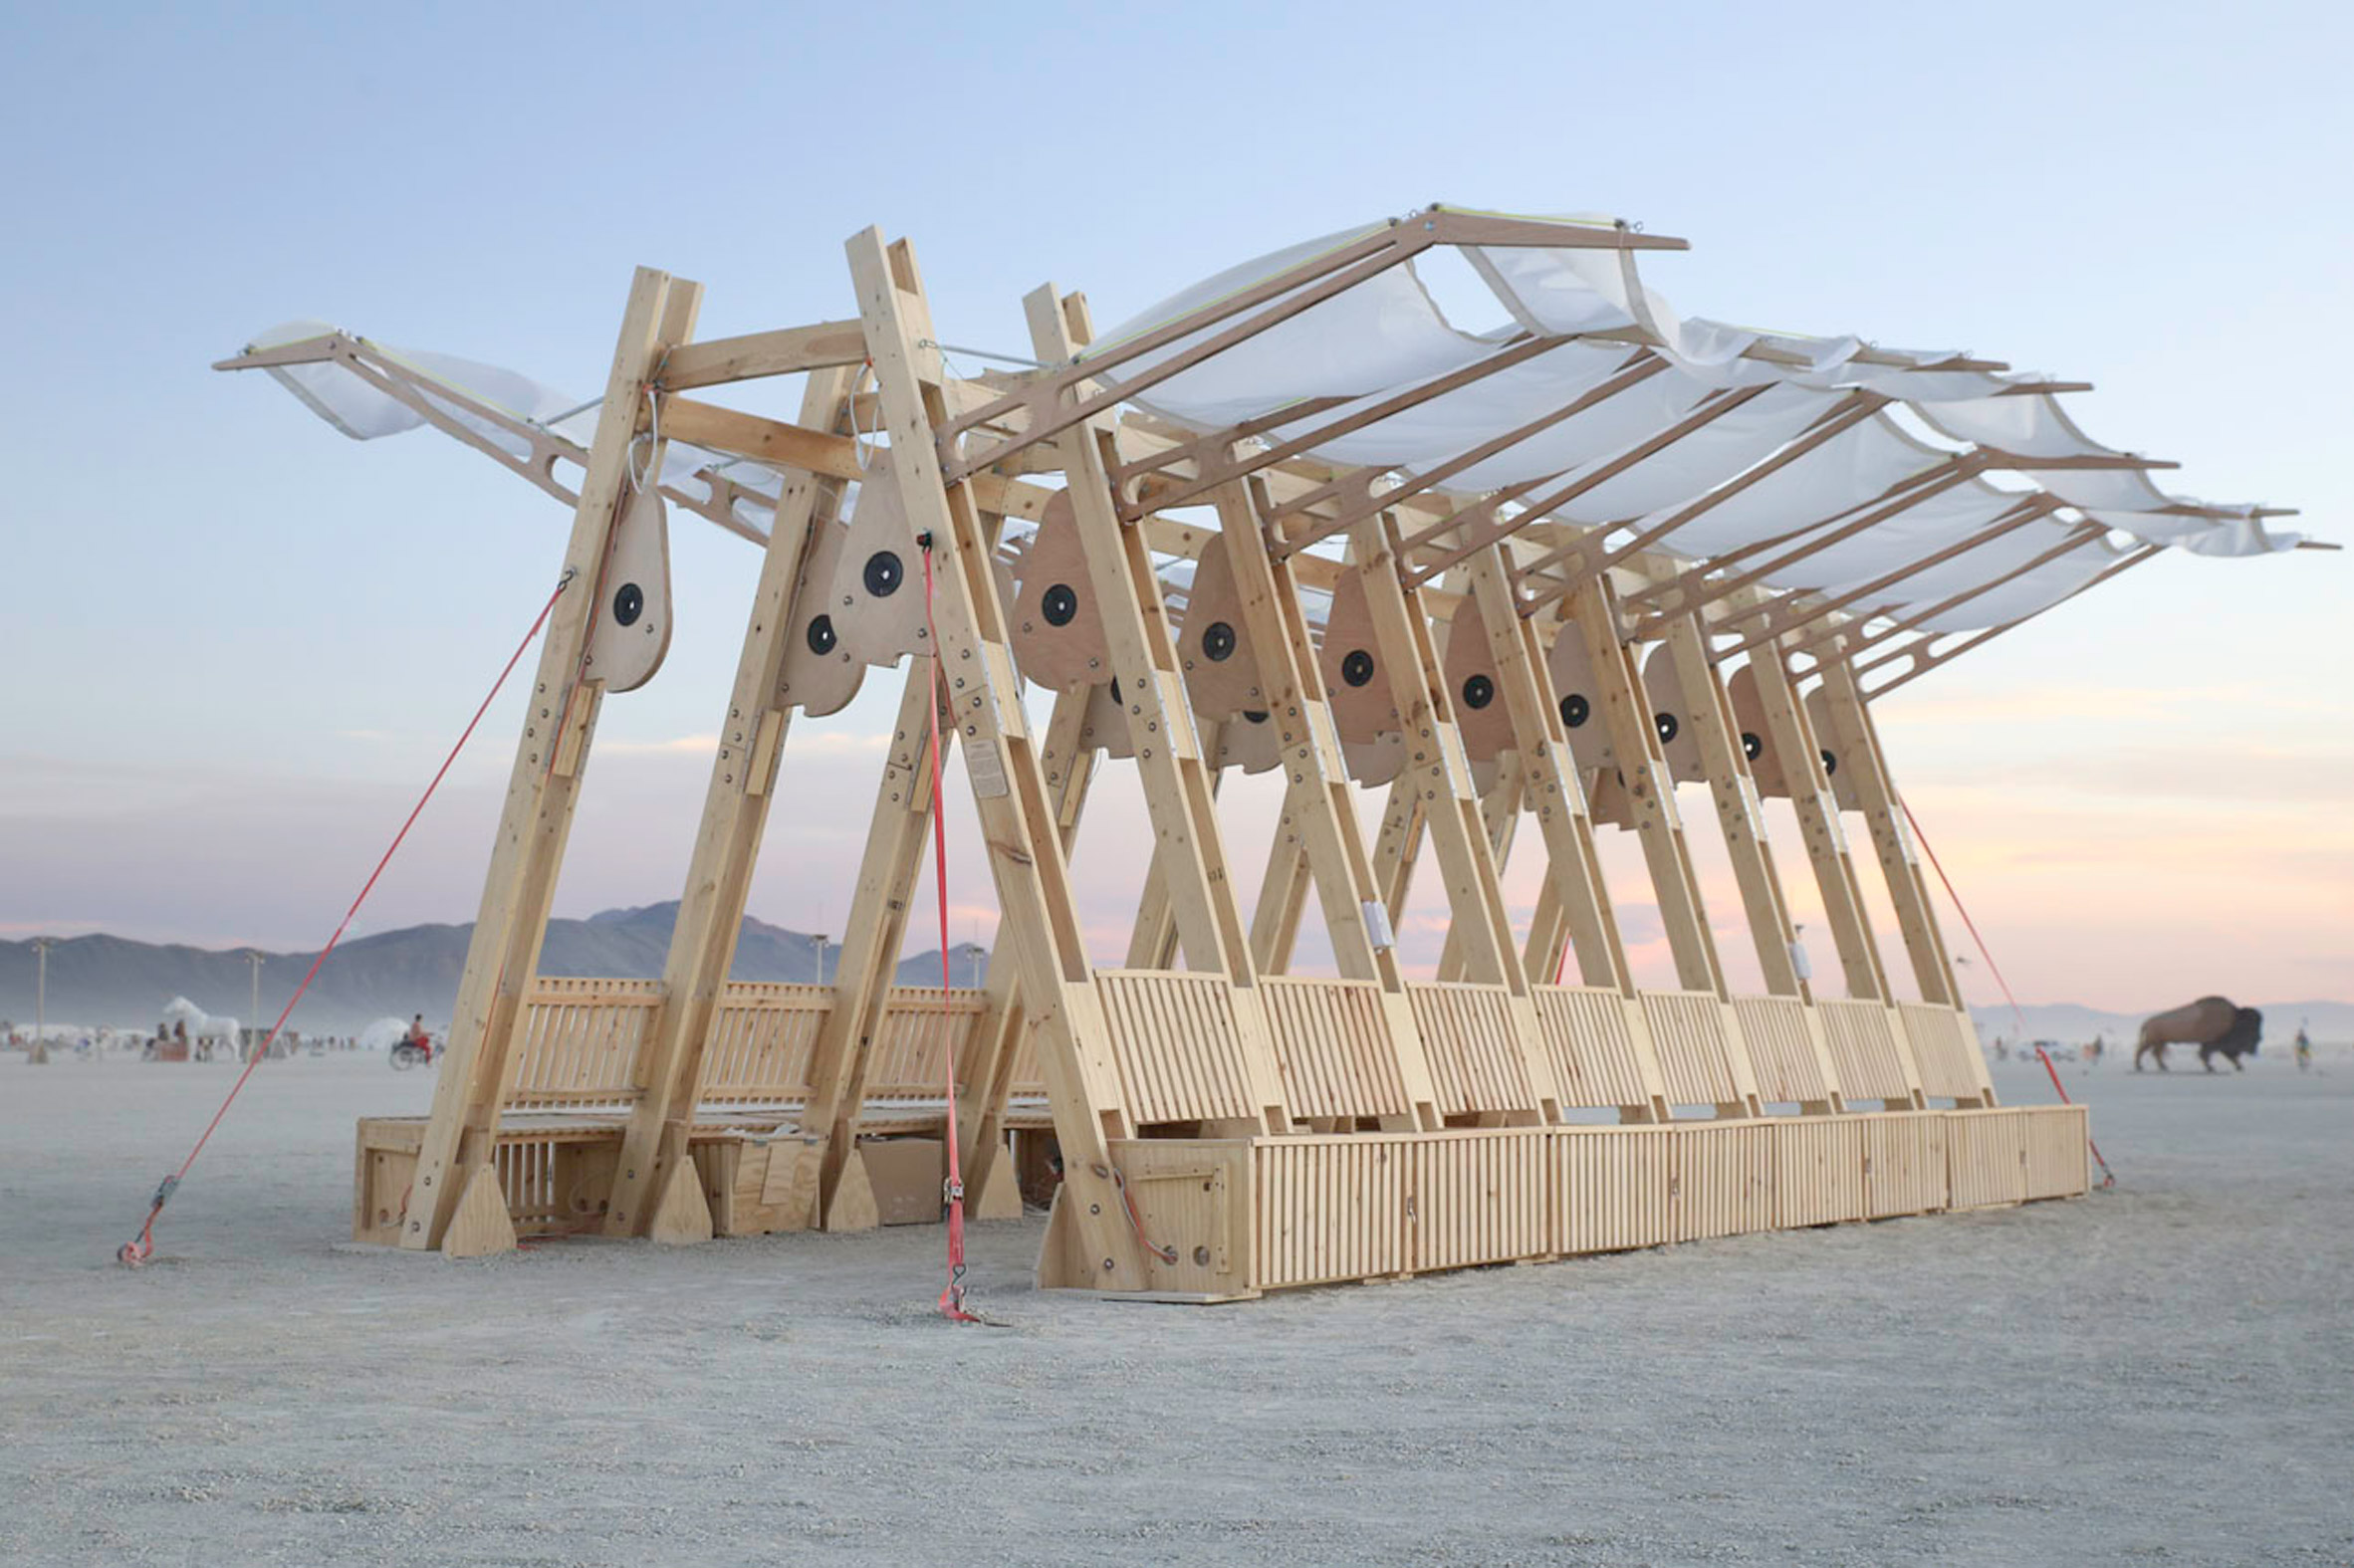 Archaeopteryx at Burning Man 2019